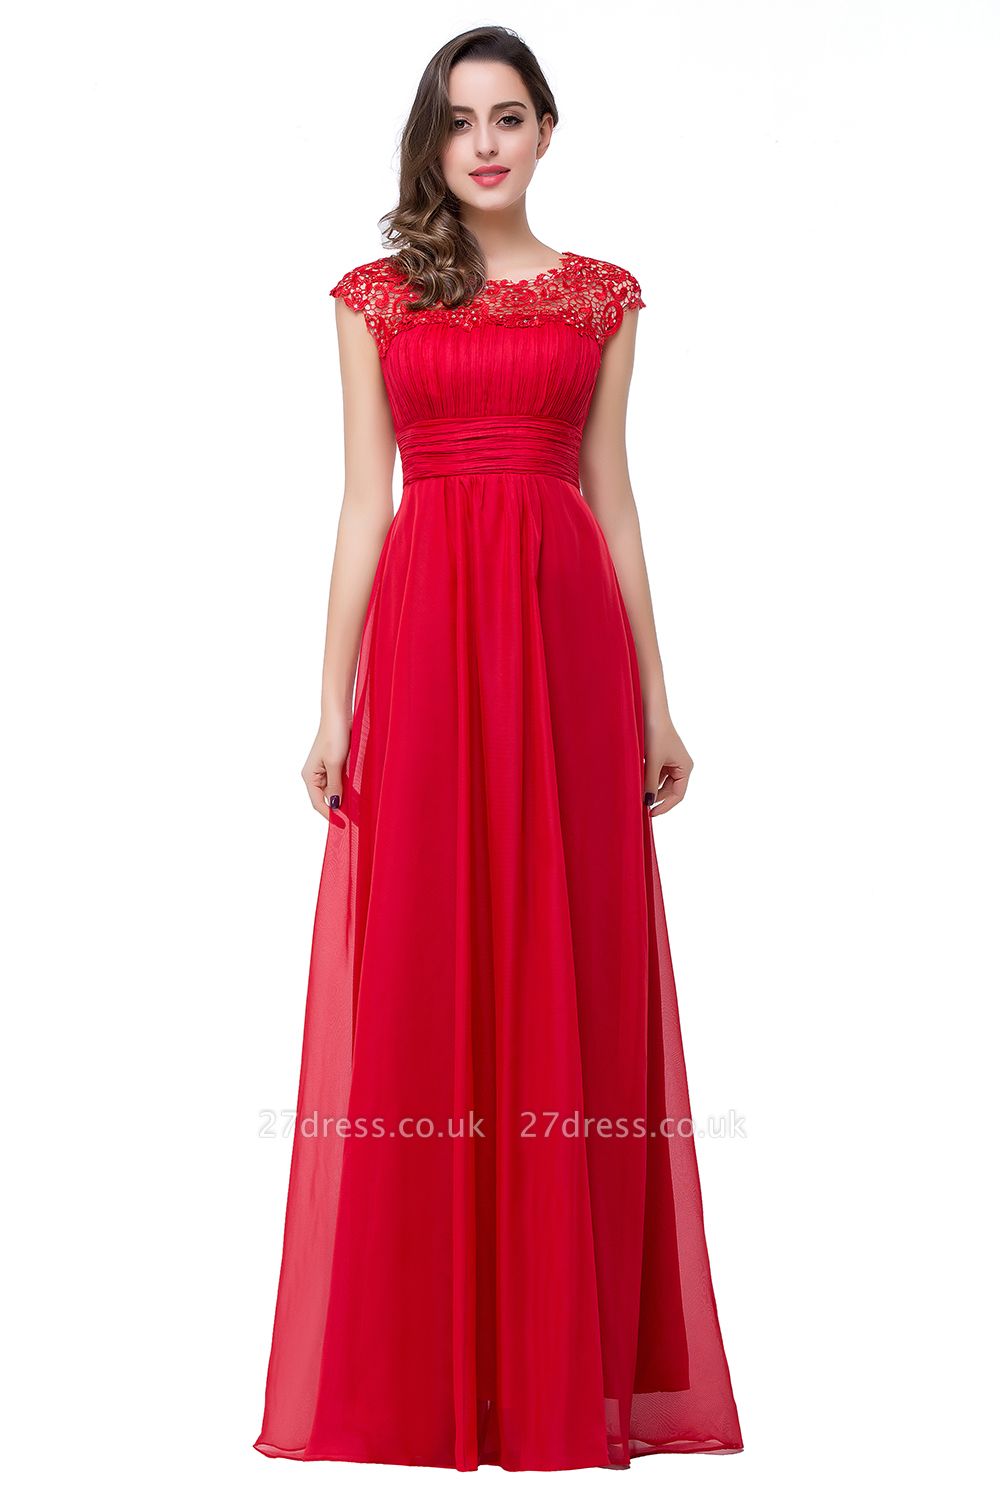 Red Chiffon Lace Prom Dress UK Zipper Illusion Cap Sleeve Long Evening Dress